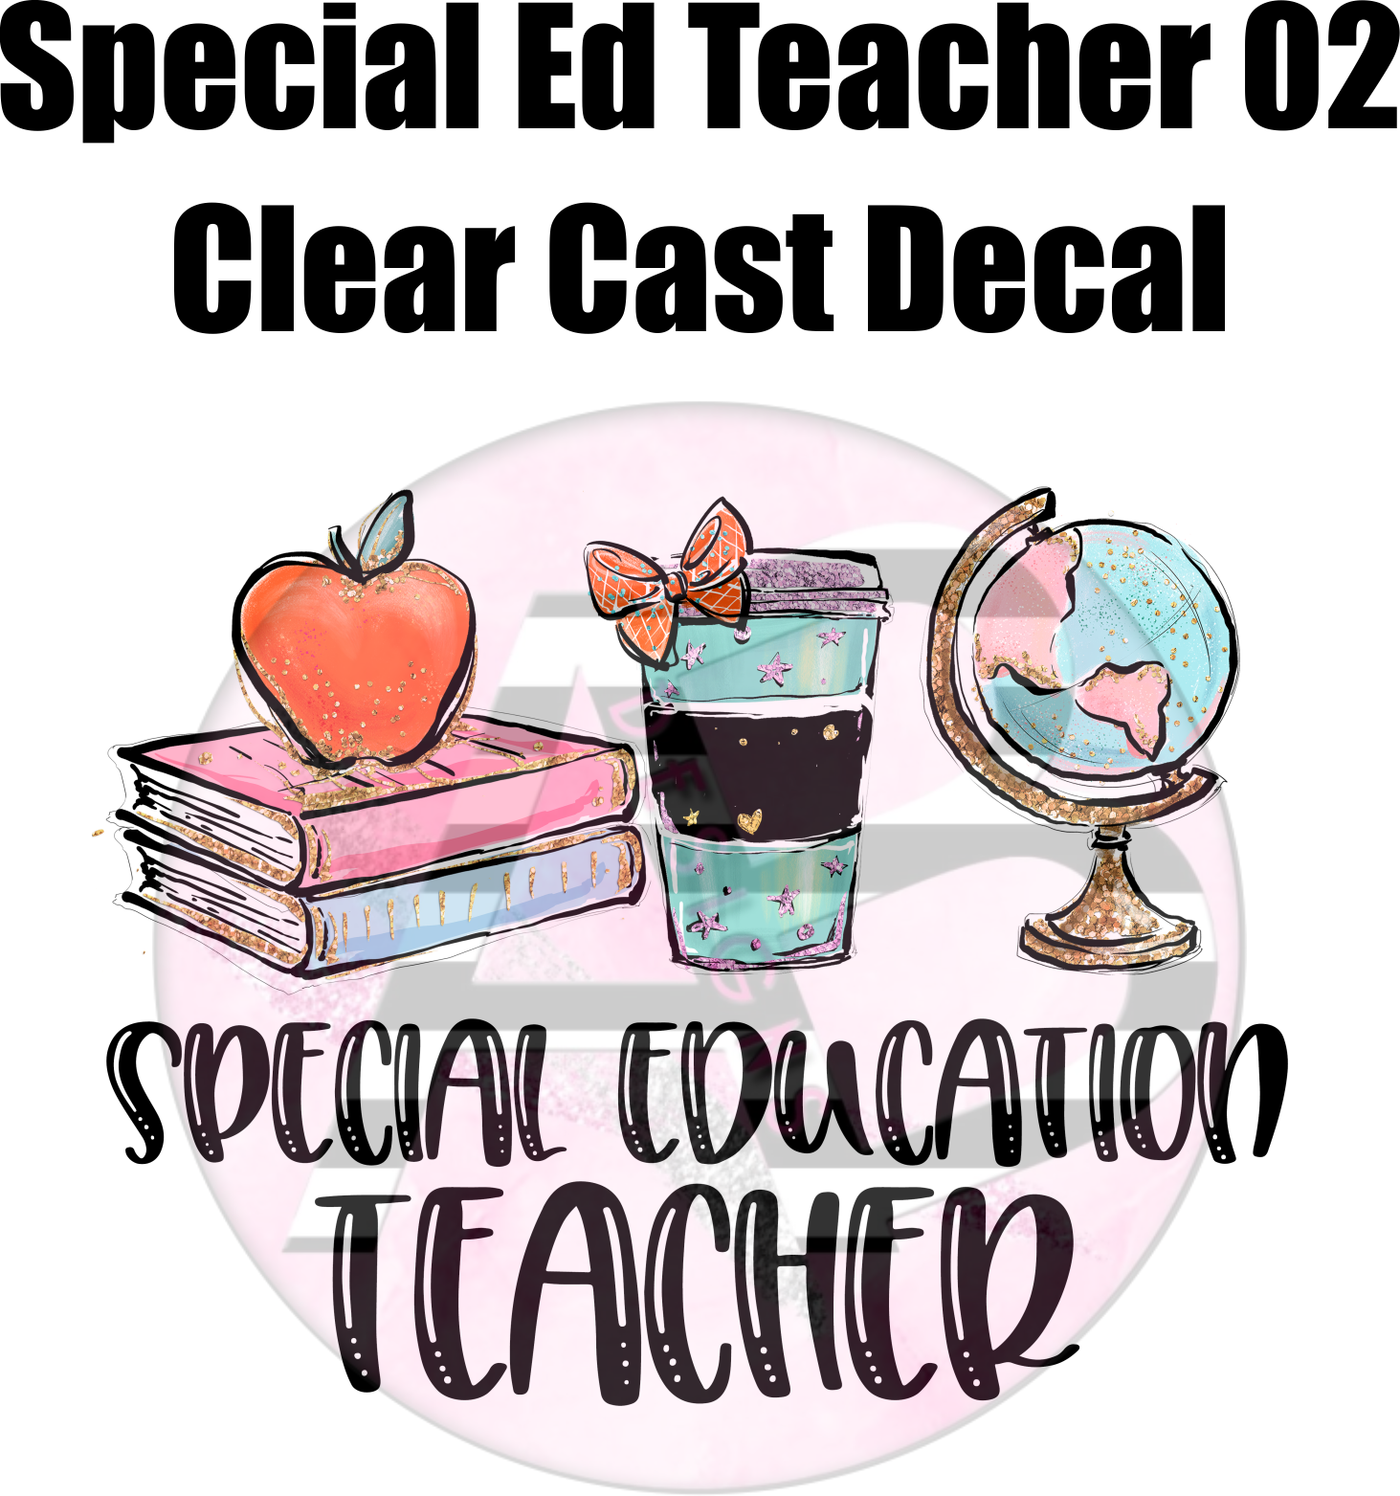 Special Education Teacher 02 - Clear Cast Decal